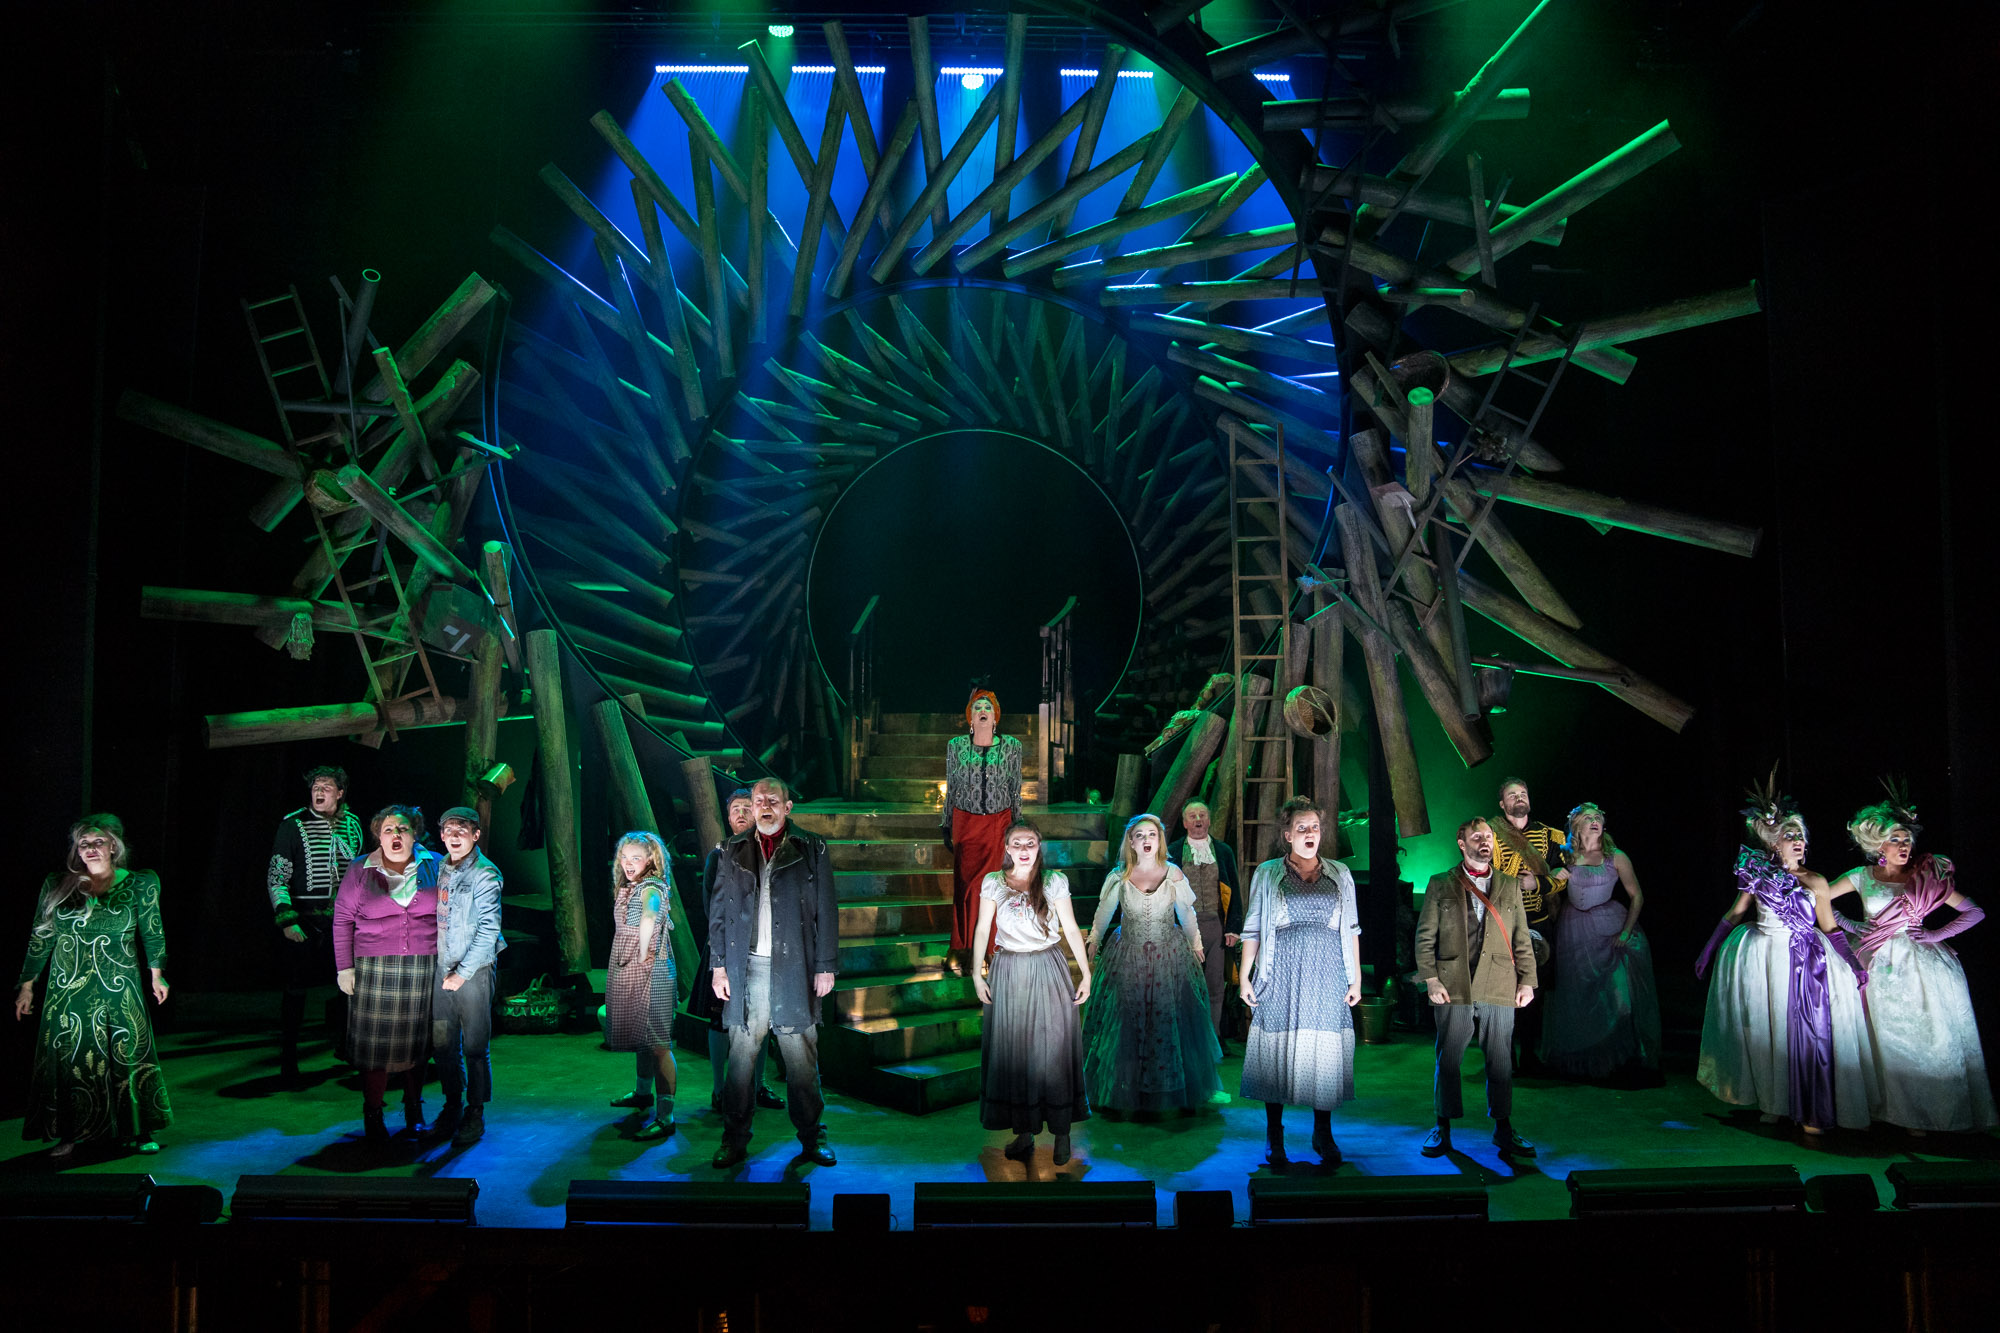 Northern Ireland Opera’s terrific production of Stephen Sondheim’s Into